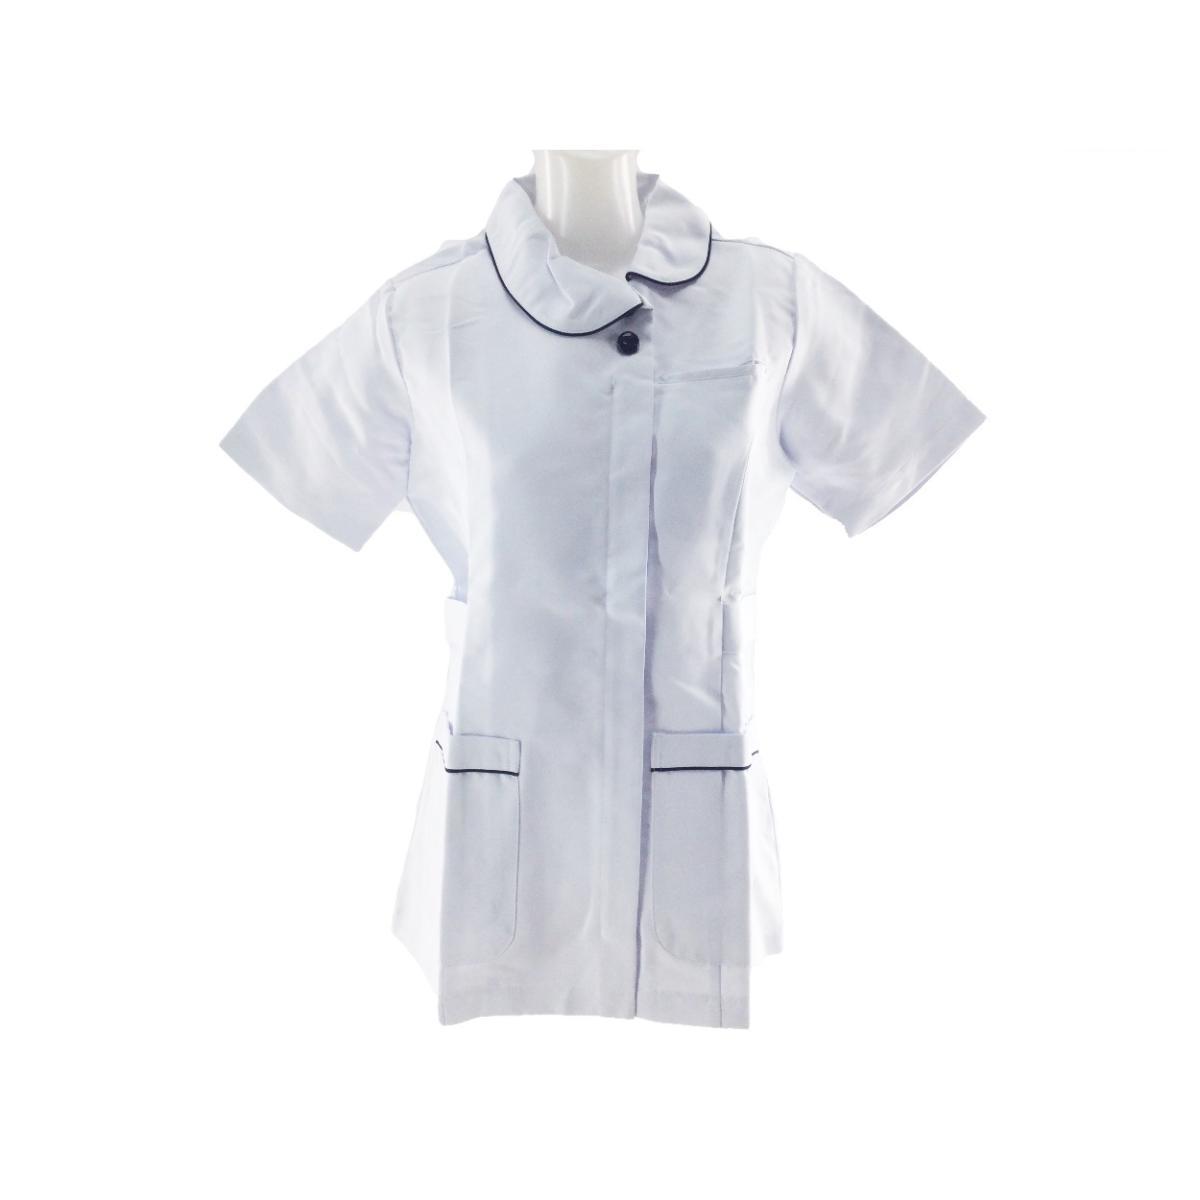 asimeto Lee collar jacket gyaba nursing . nursing .LL size white x navy postage 250 jpy 